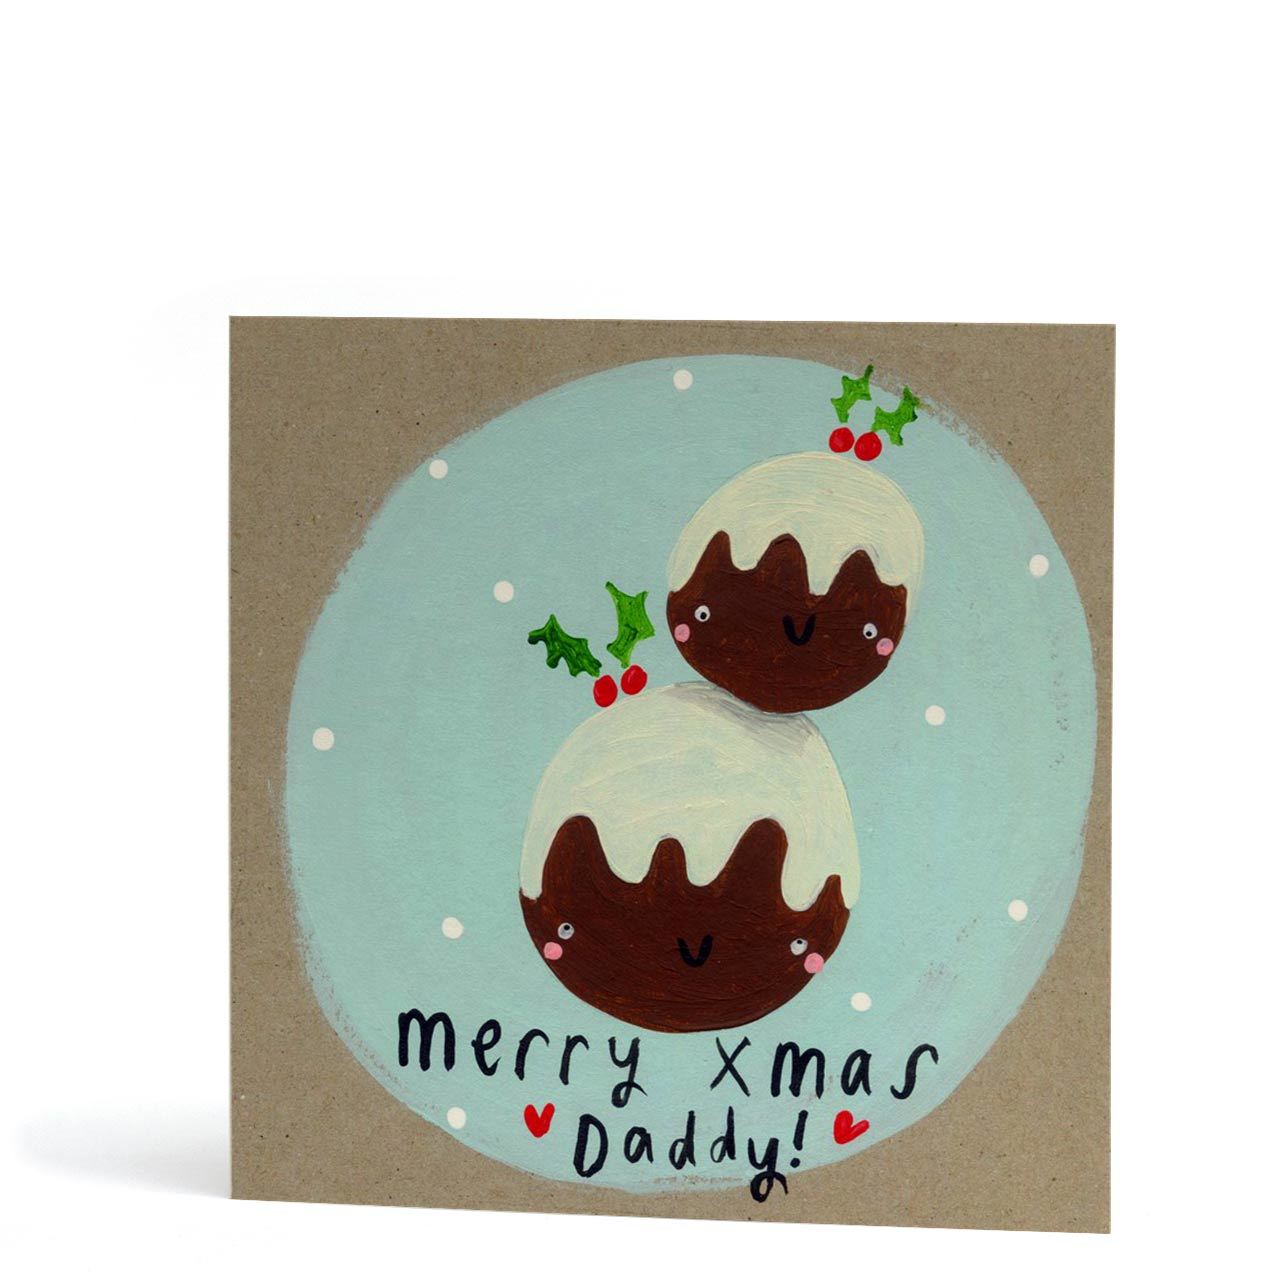 Merry Xmas Daddy Greeting Card